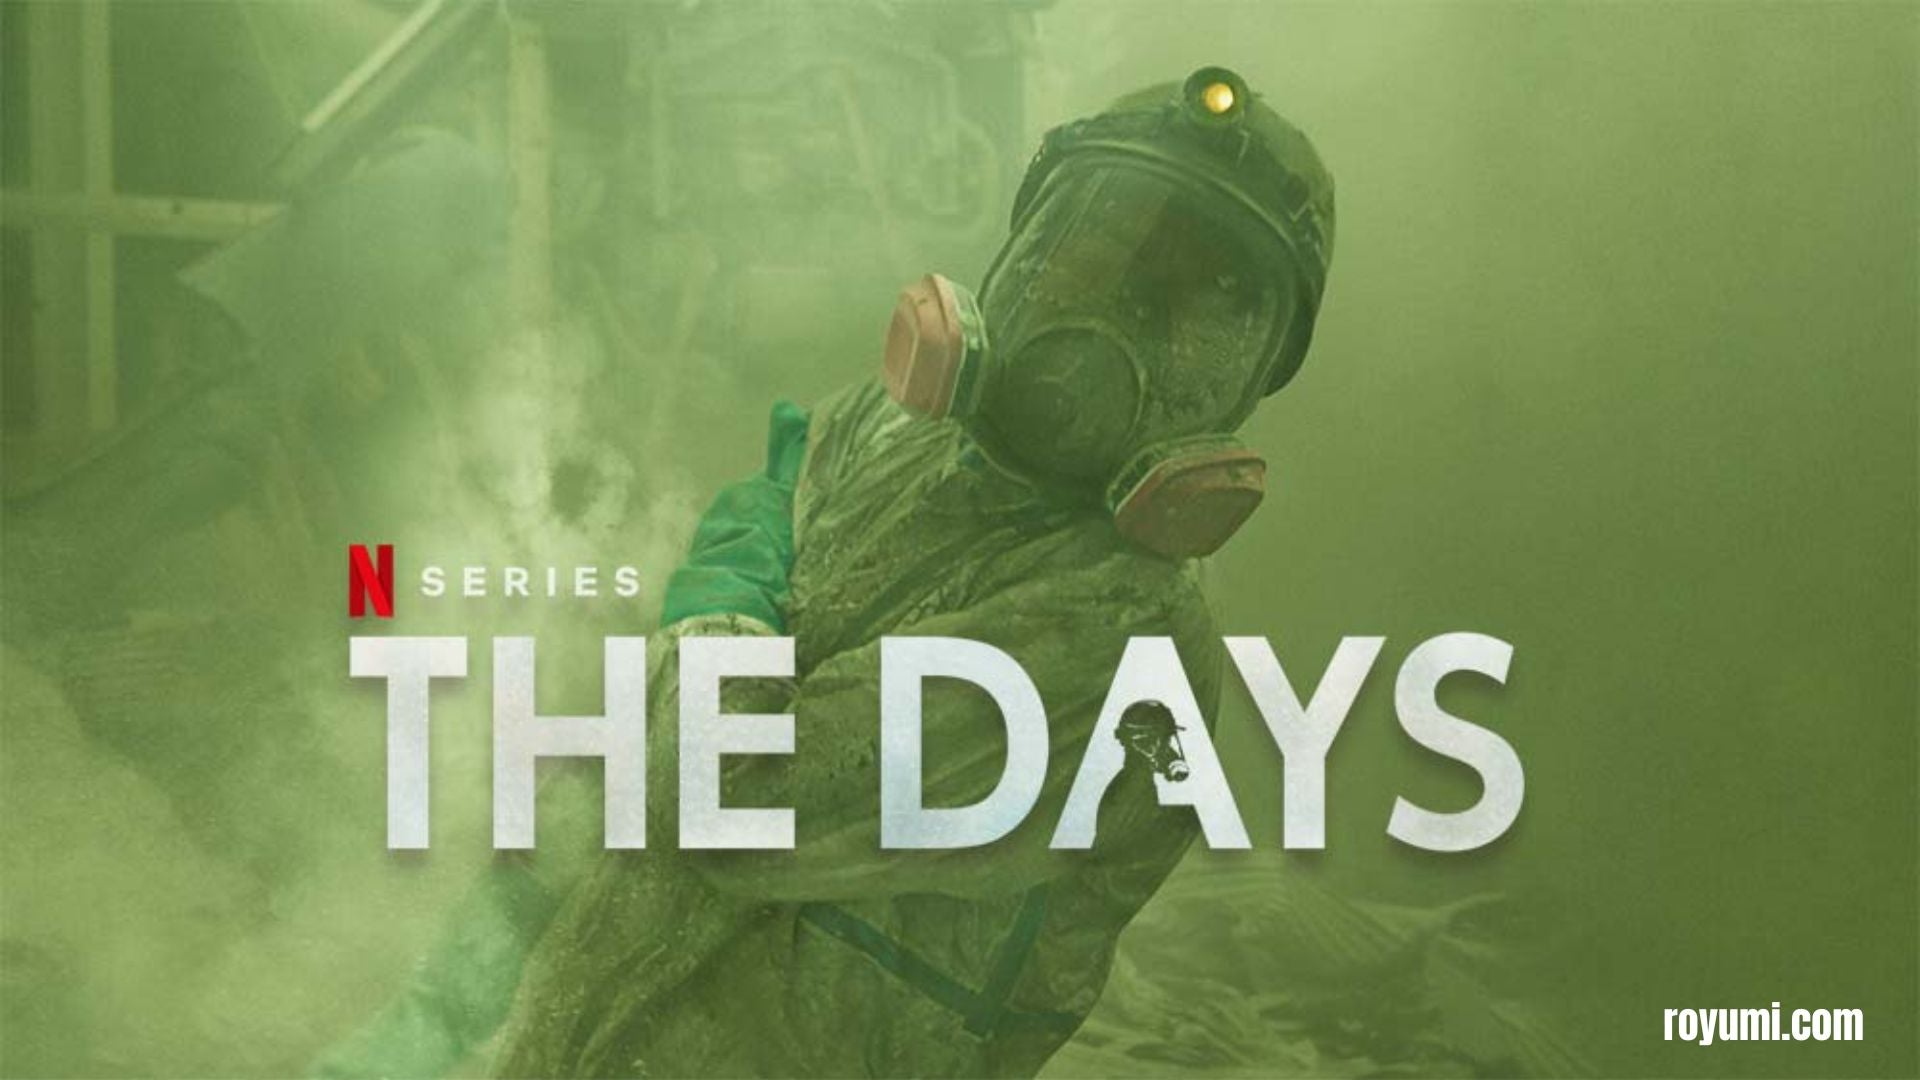 The Days: 福島の災害を探る魅力的なシリーズ